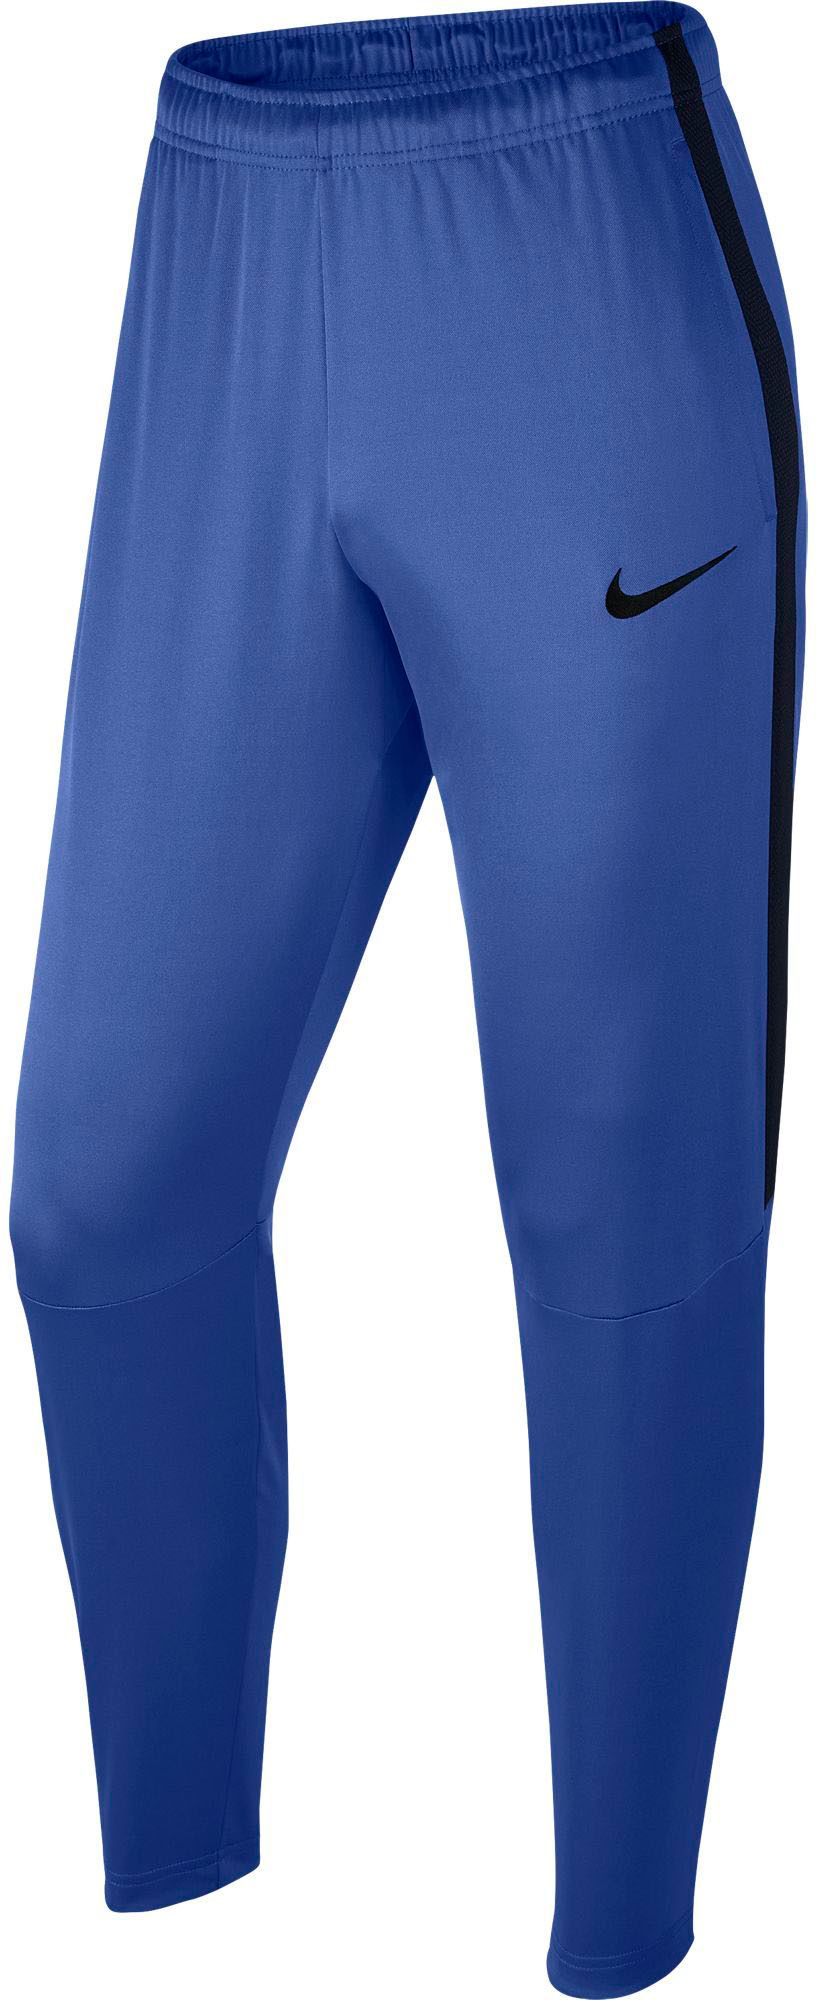 Nike Men's Epic Pants - .97